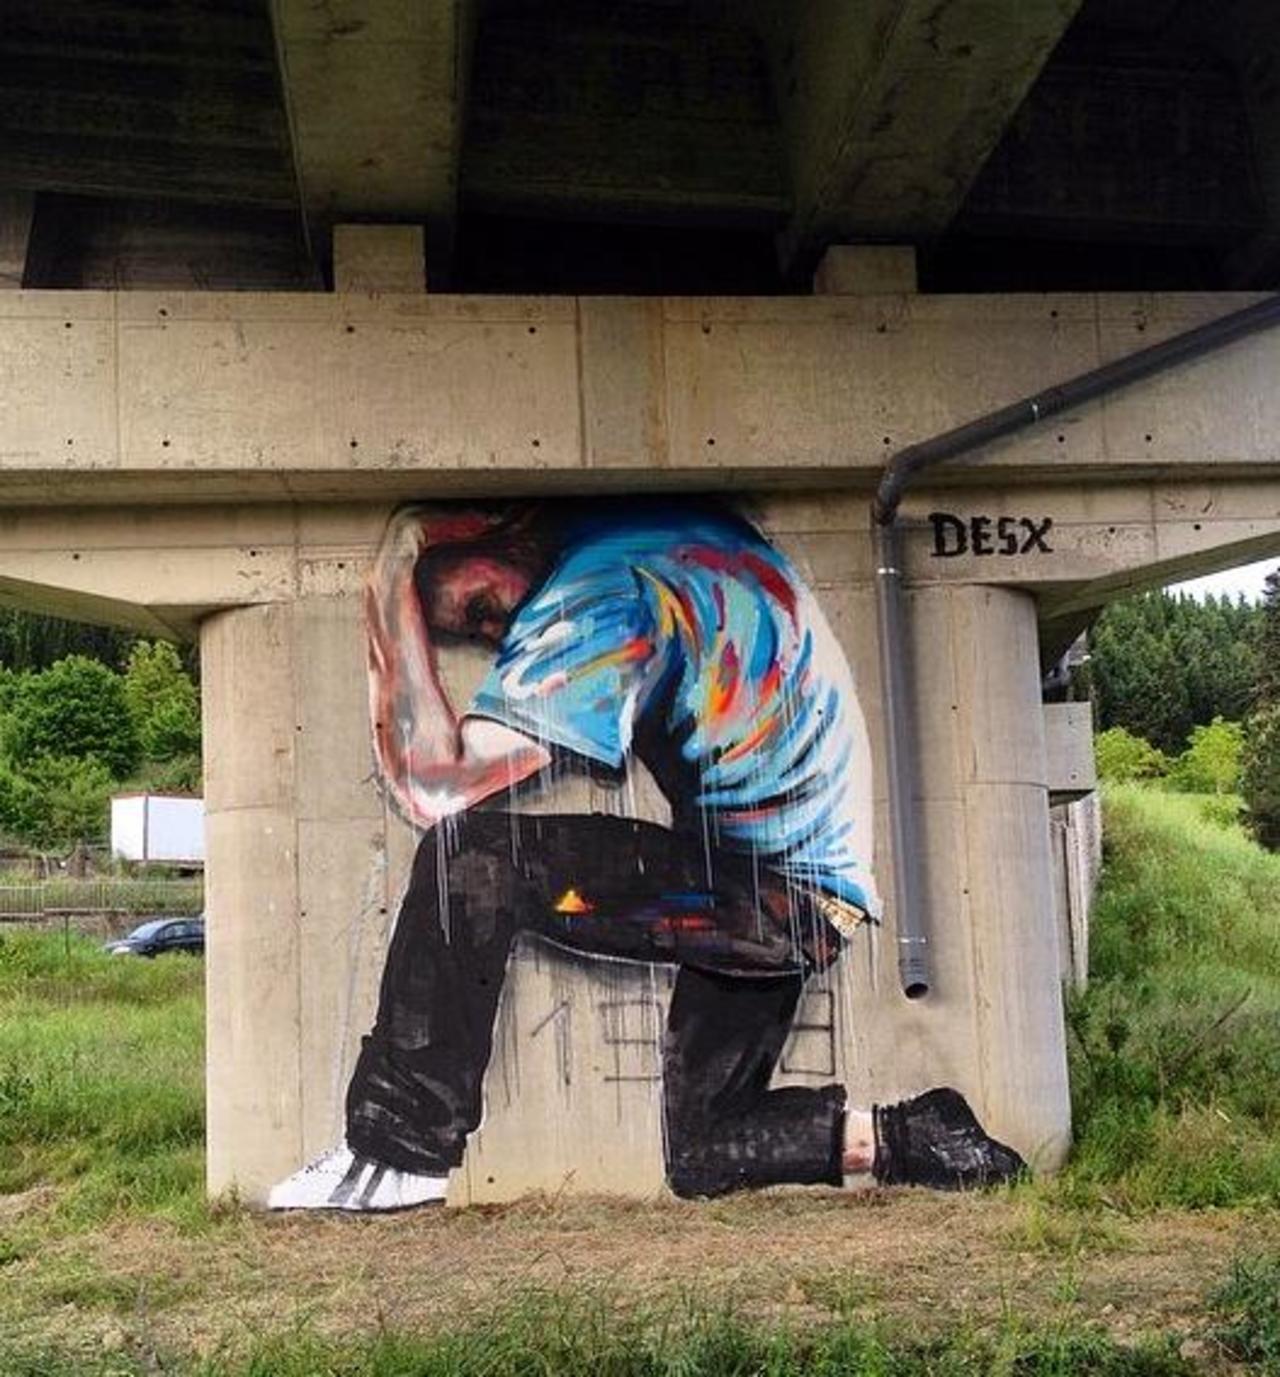 Brilliant placement in this Street Art piece by Desx 

#art #arte #graffiti #streetart http://t.co/L81du3Ovl3